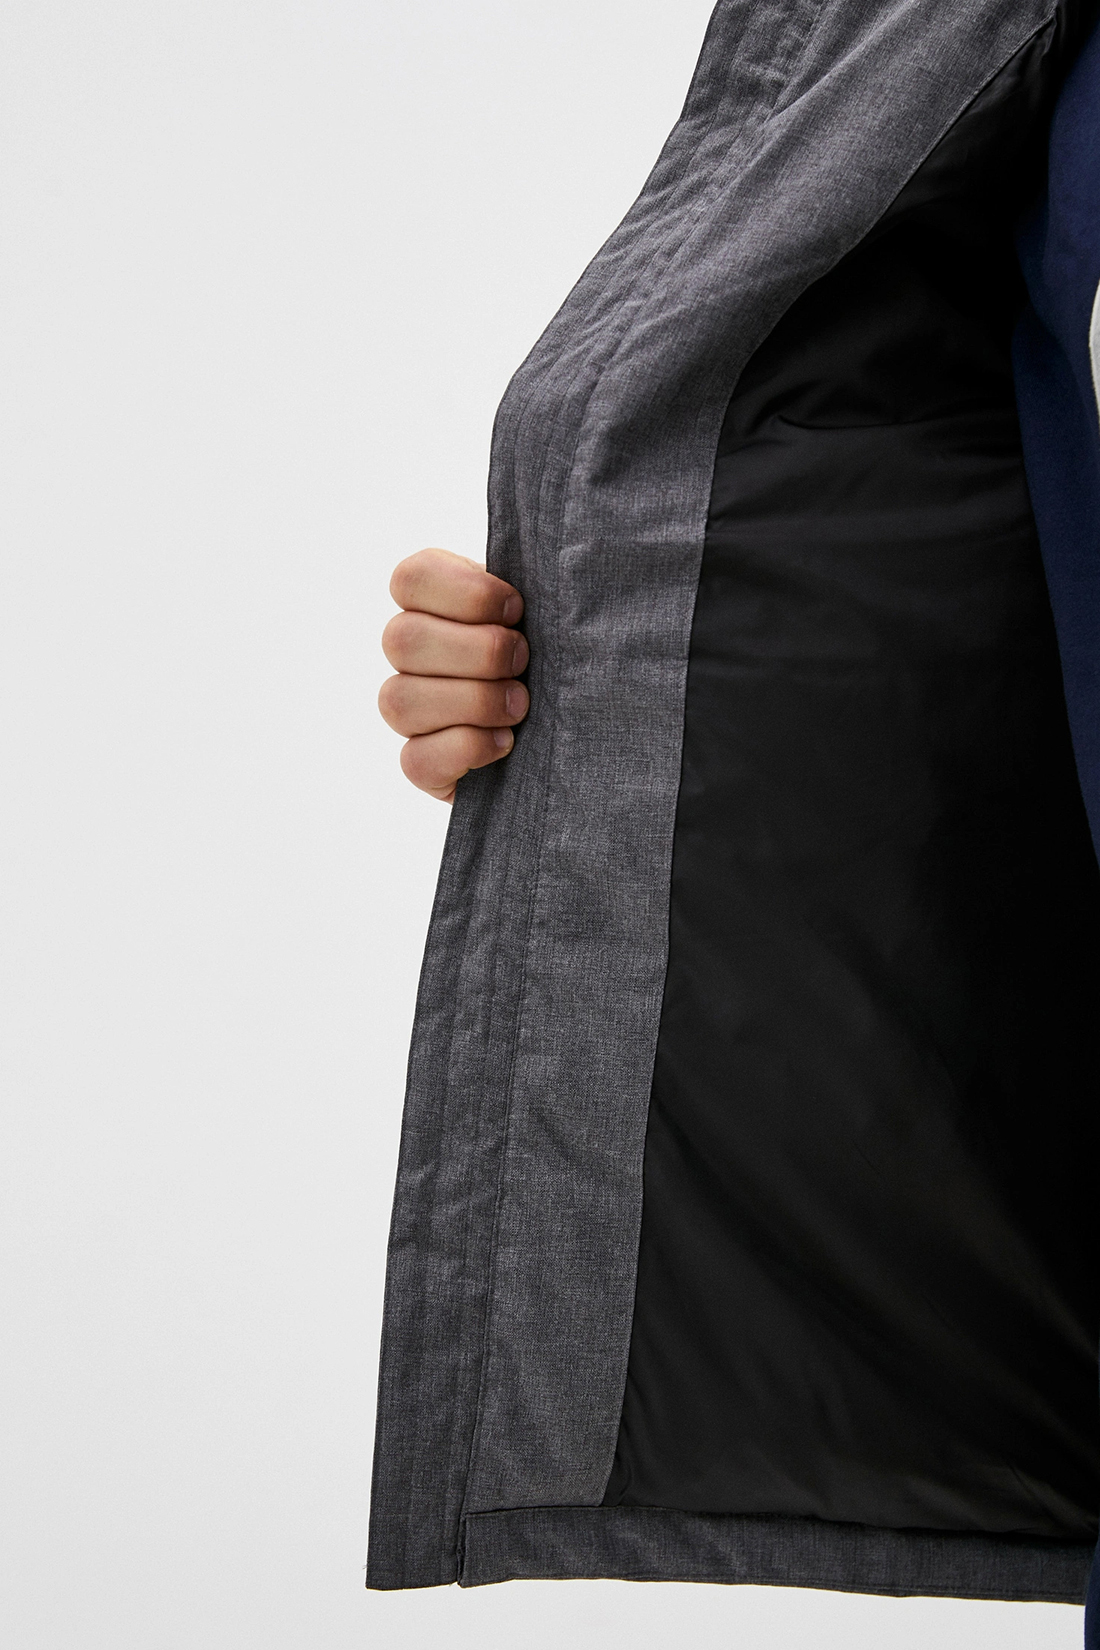 Куртка (Эко пух) (арт. baon B540508), размер XL, цвет deep grey melange#серый Куртка (Эко пух) (арт. baon B540508) - фото 4